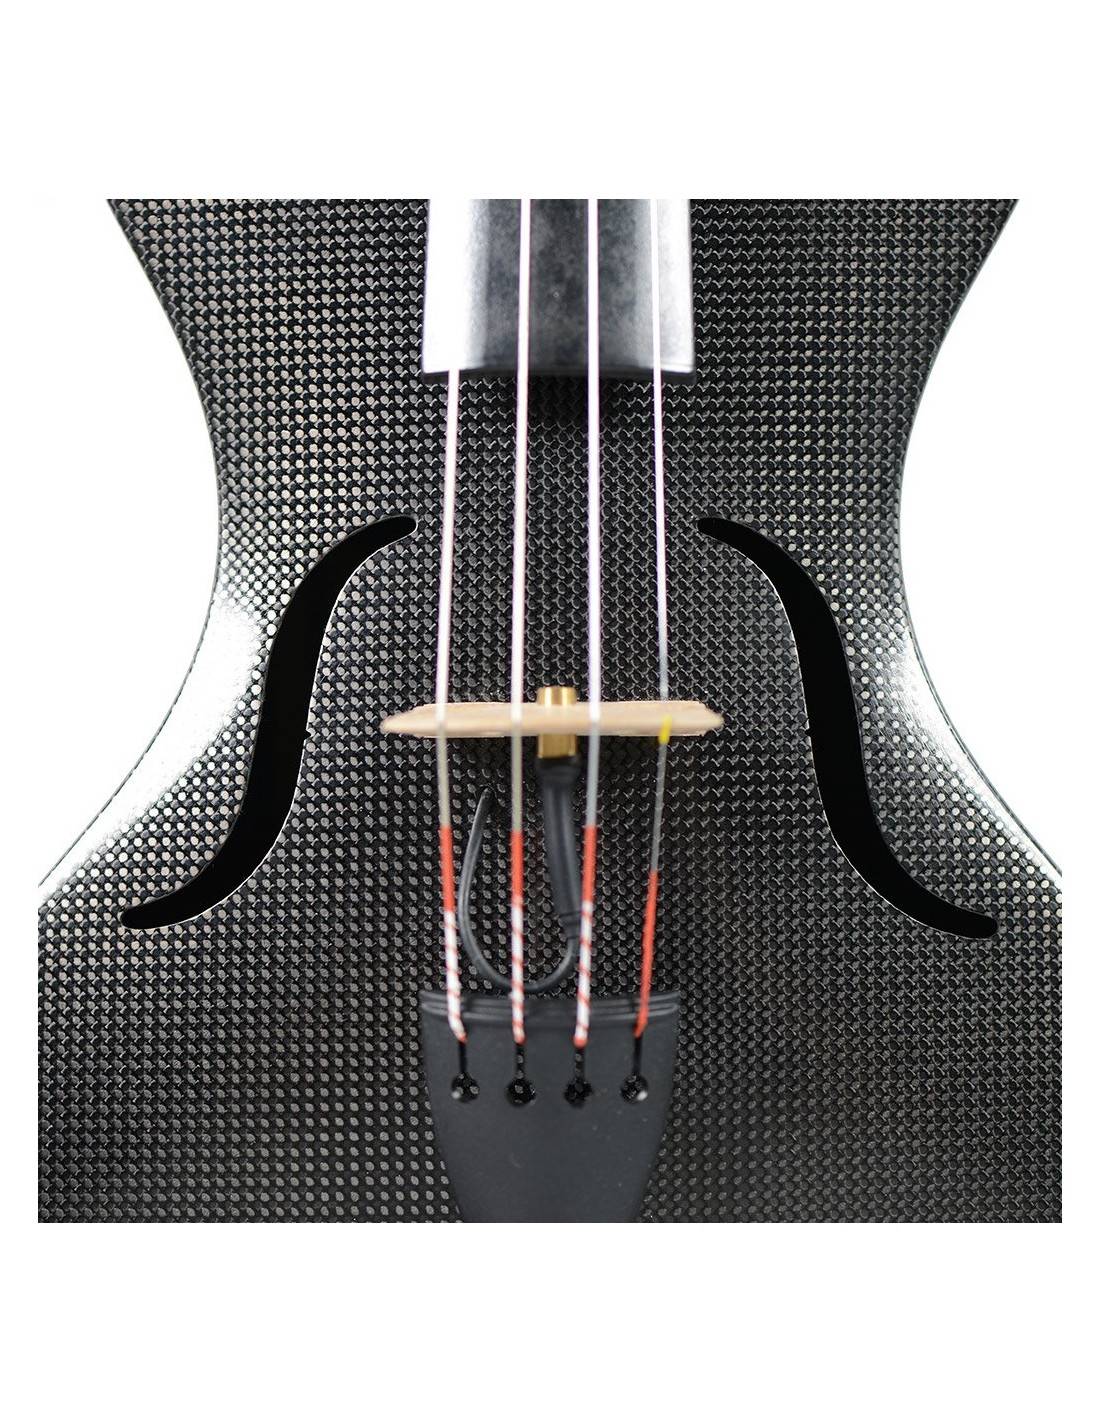 Carbon Violin 4/4 EvoLine Hybrid